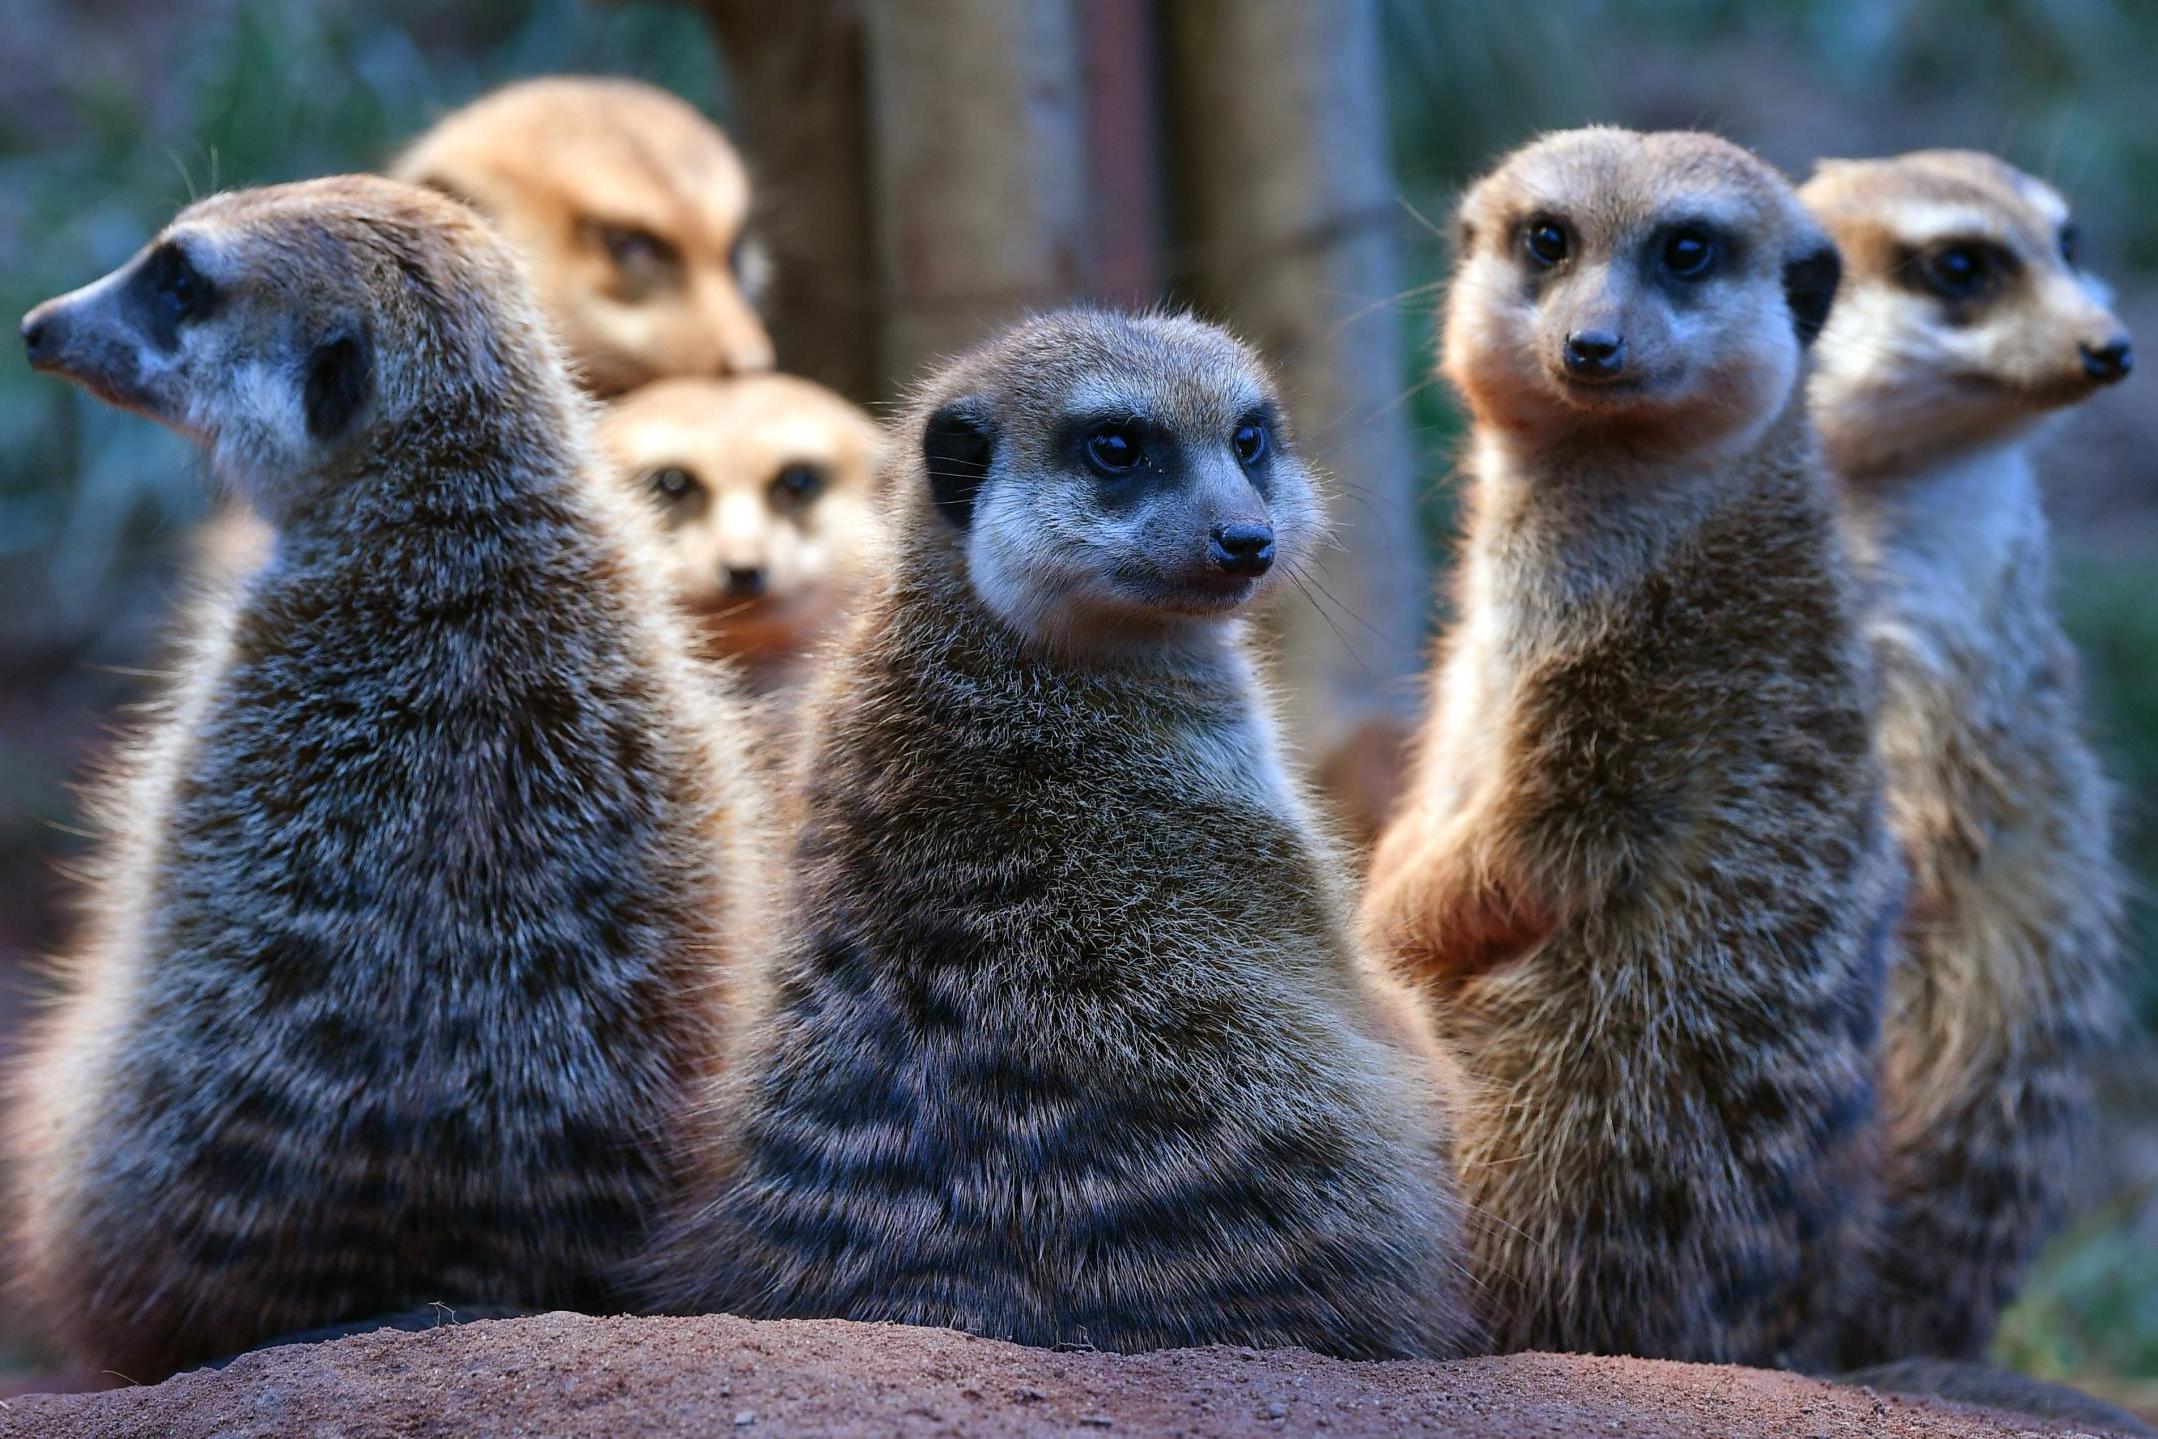 Meerkats use ‘move calls’ to gather food (DPA/AFP)